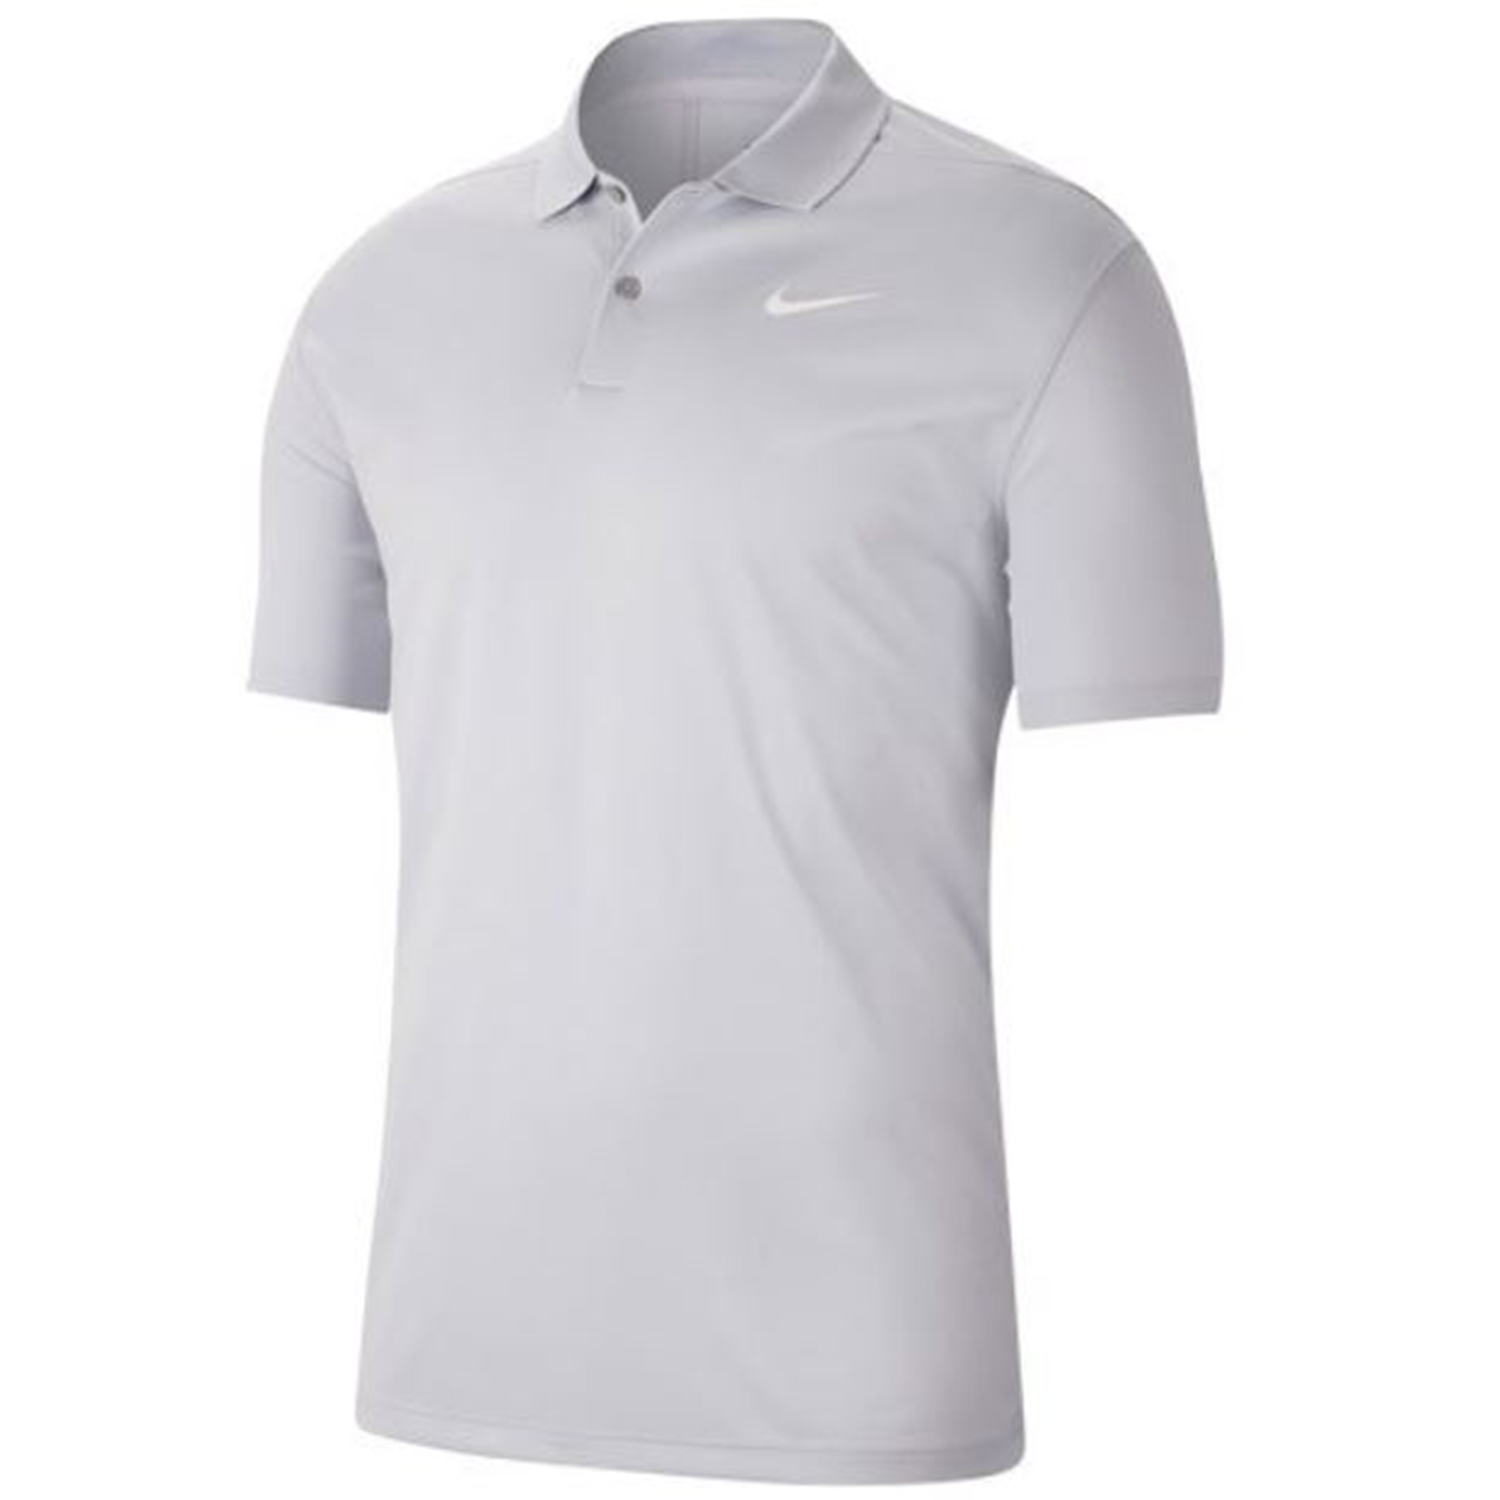 Nike Golf Shirt - Light Grey